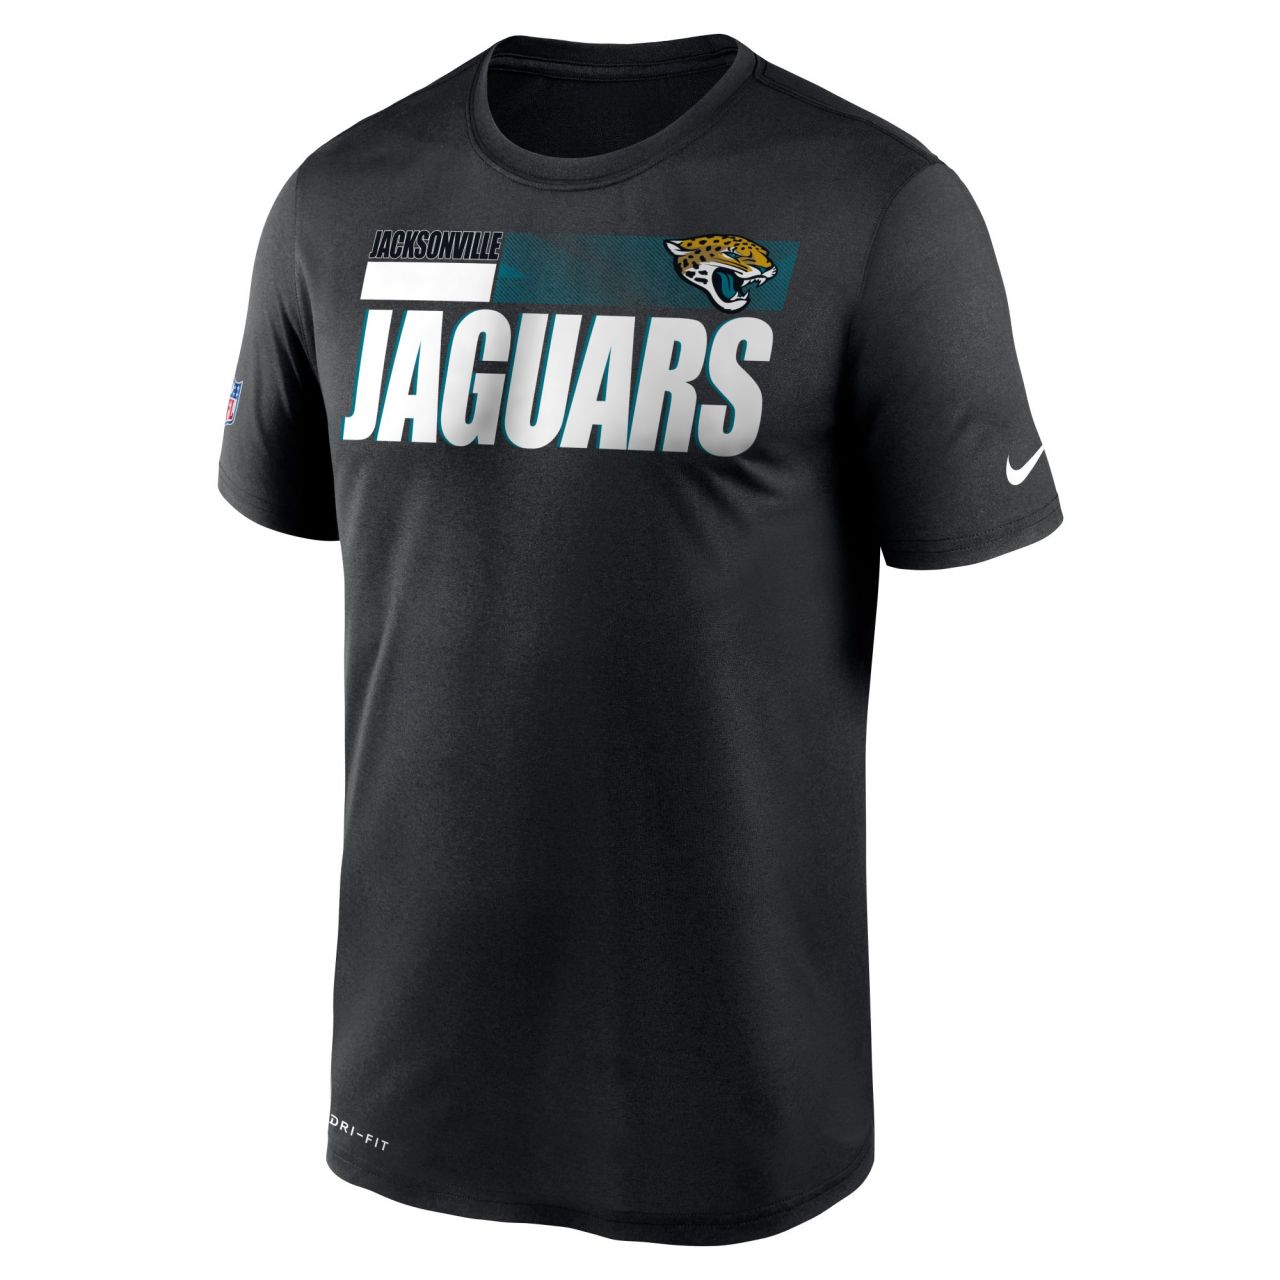 amfoo - Nike Dri-FIT Legend Shirt - SIDELINE Jacksonville Jaguars